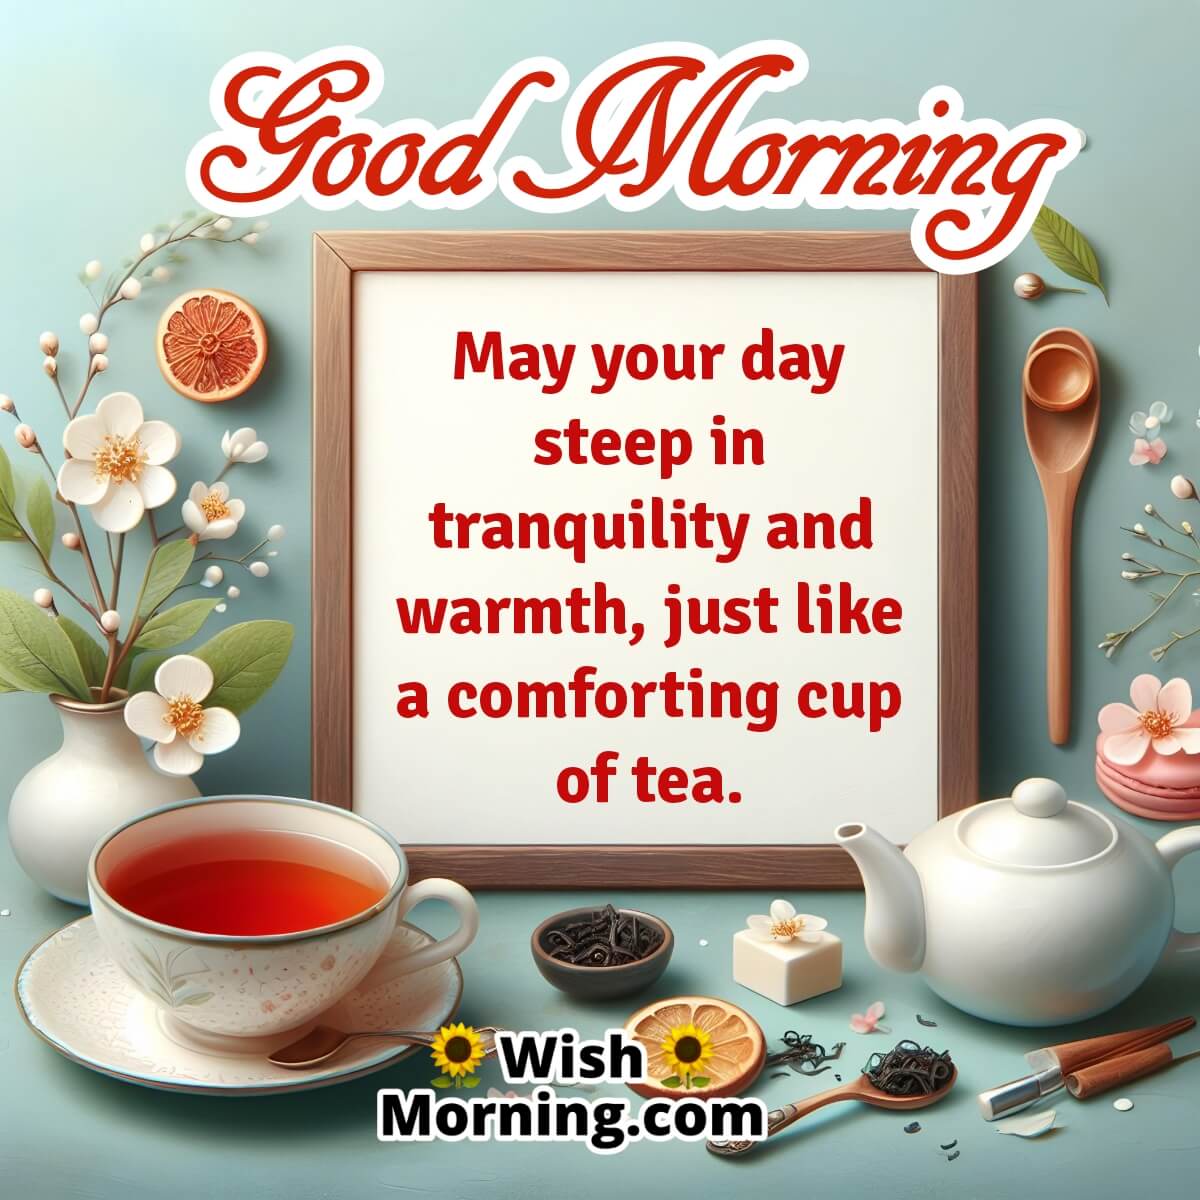 Good Morning Tea Wish Image